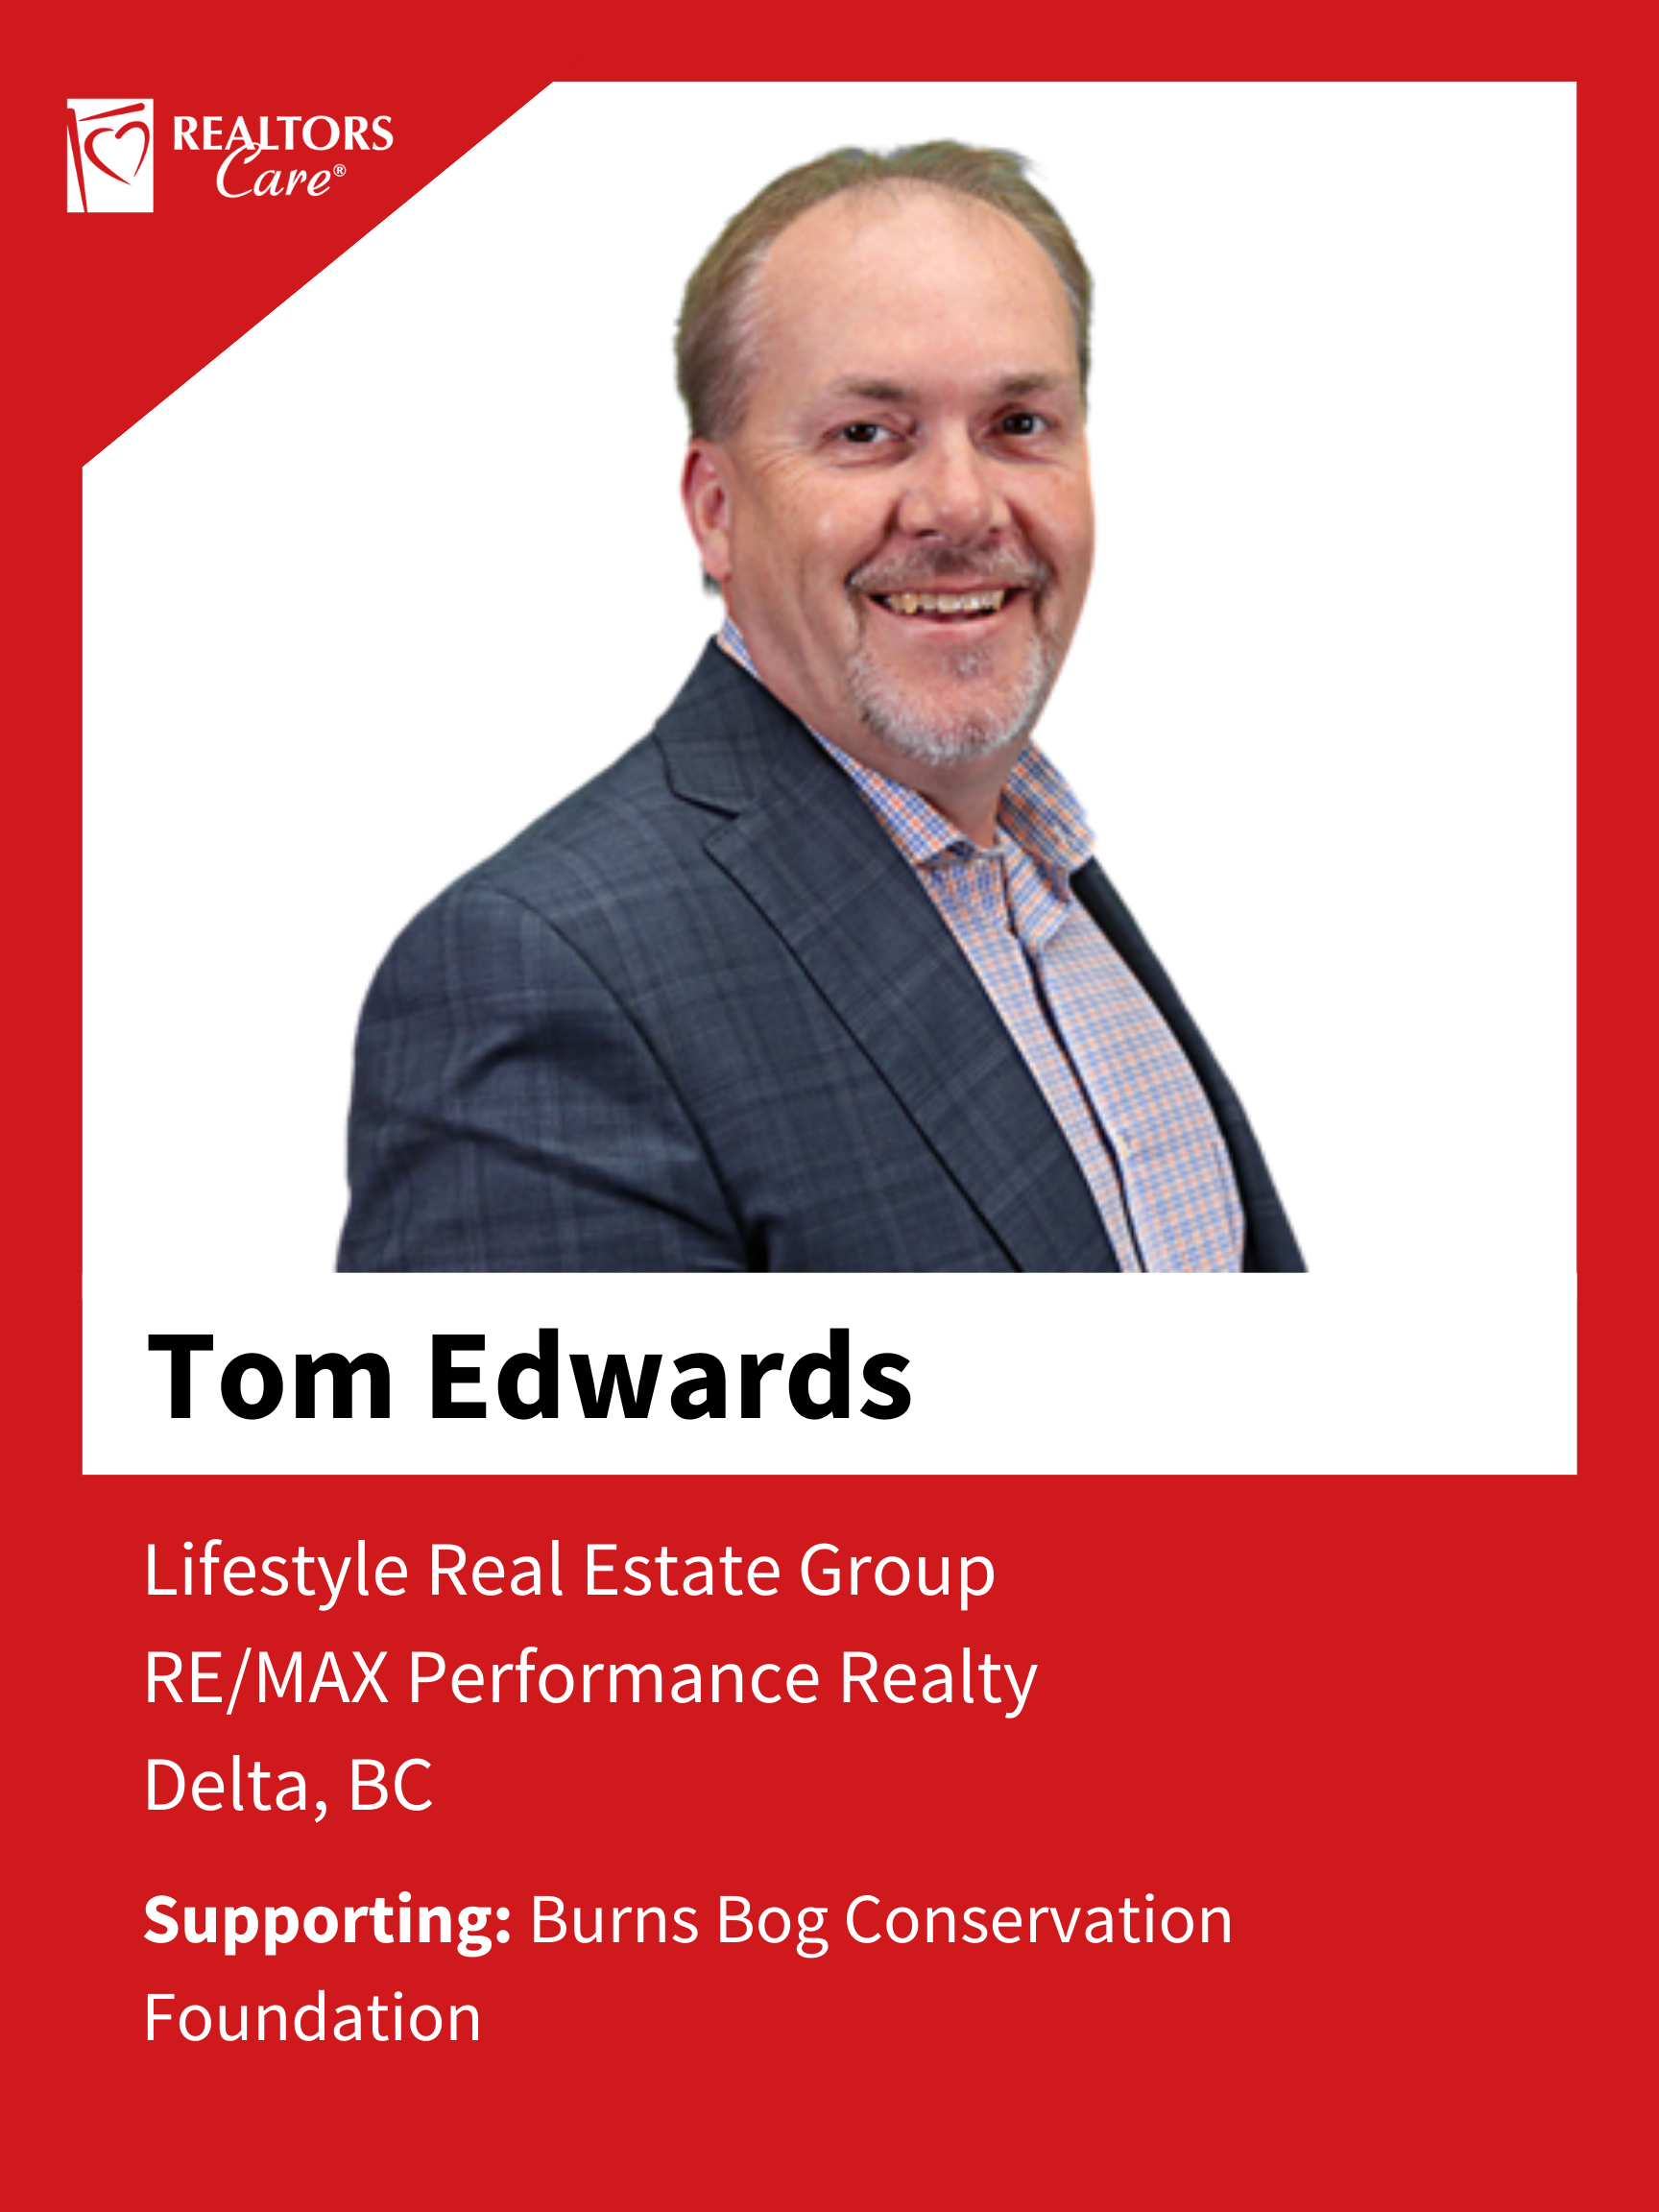 Tom Edwards
Delta	BC
